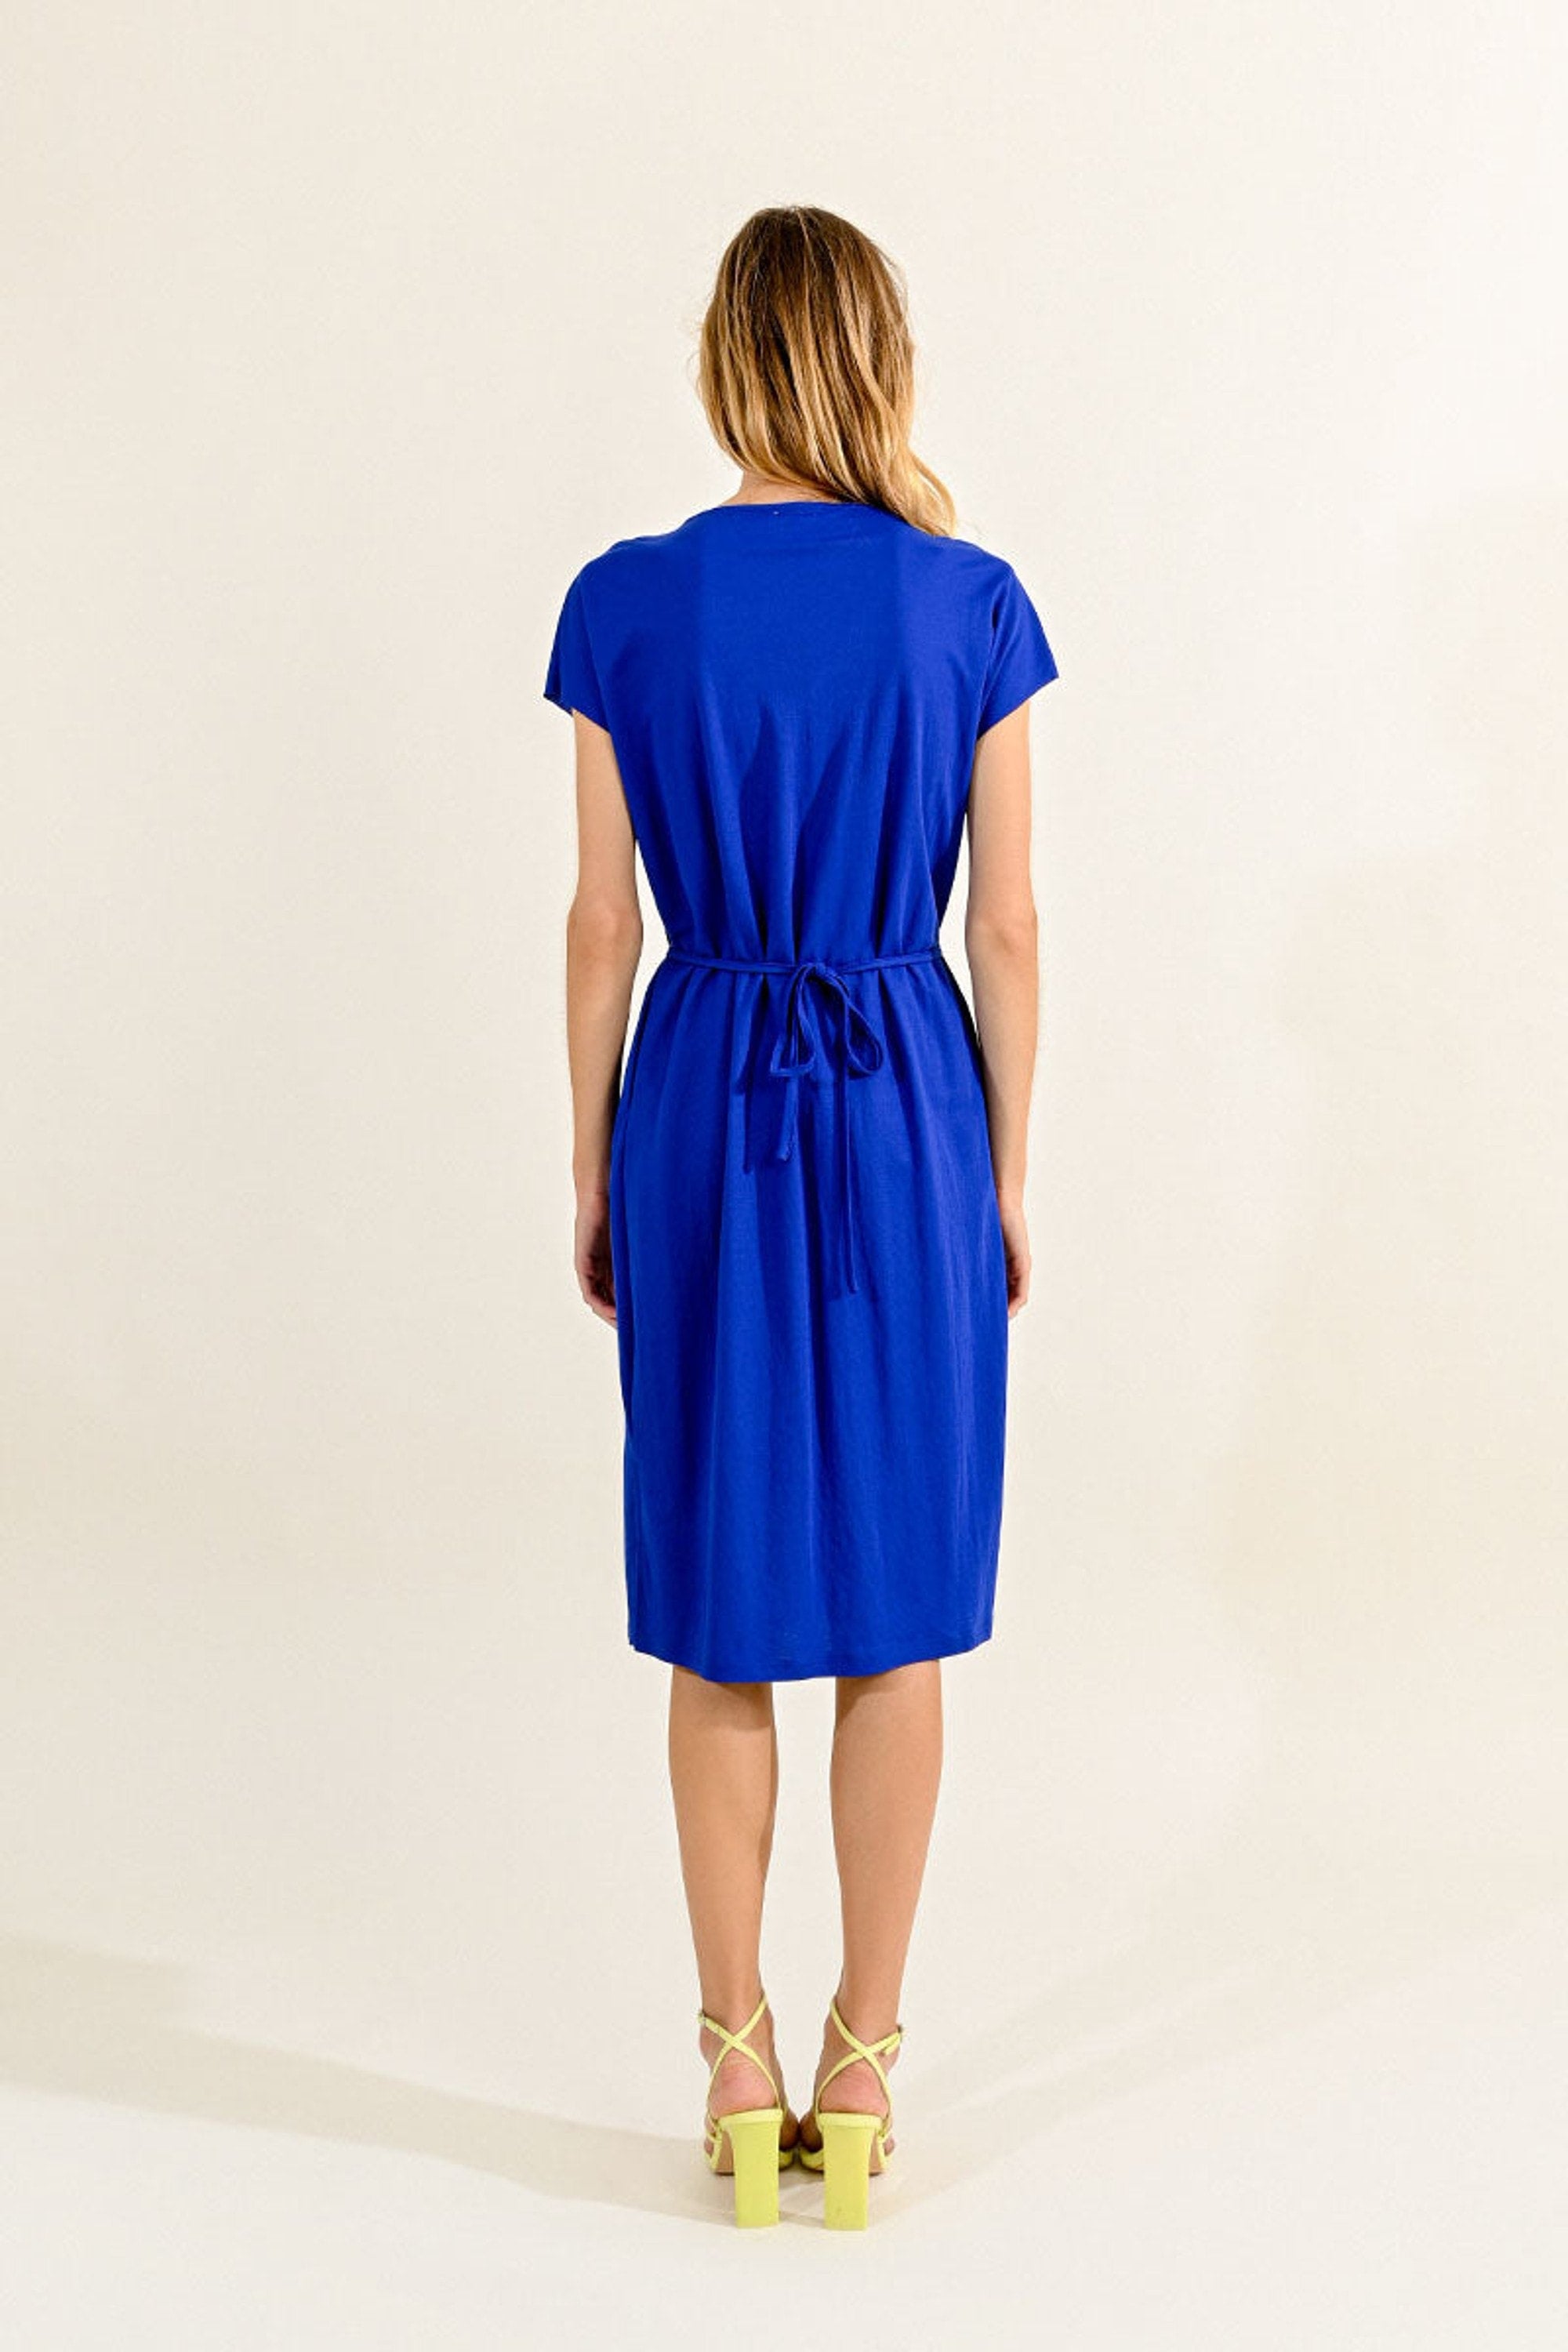 Molly Bracken Dress in Royal Blue - clever alice